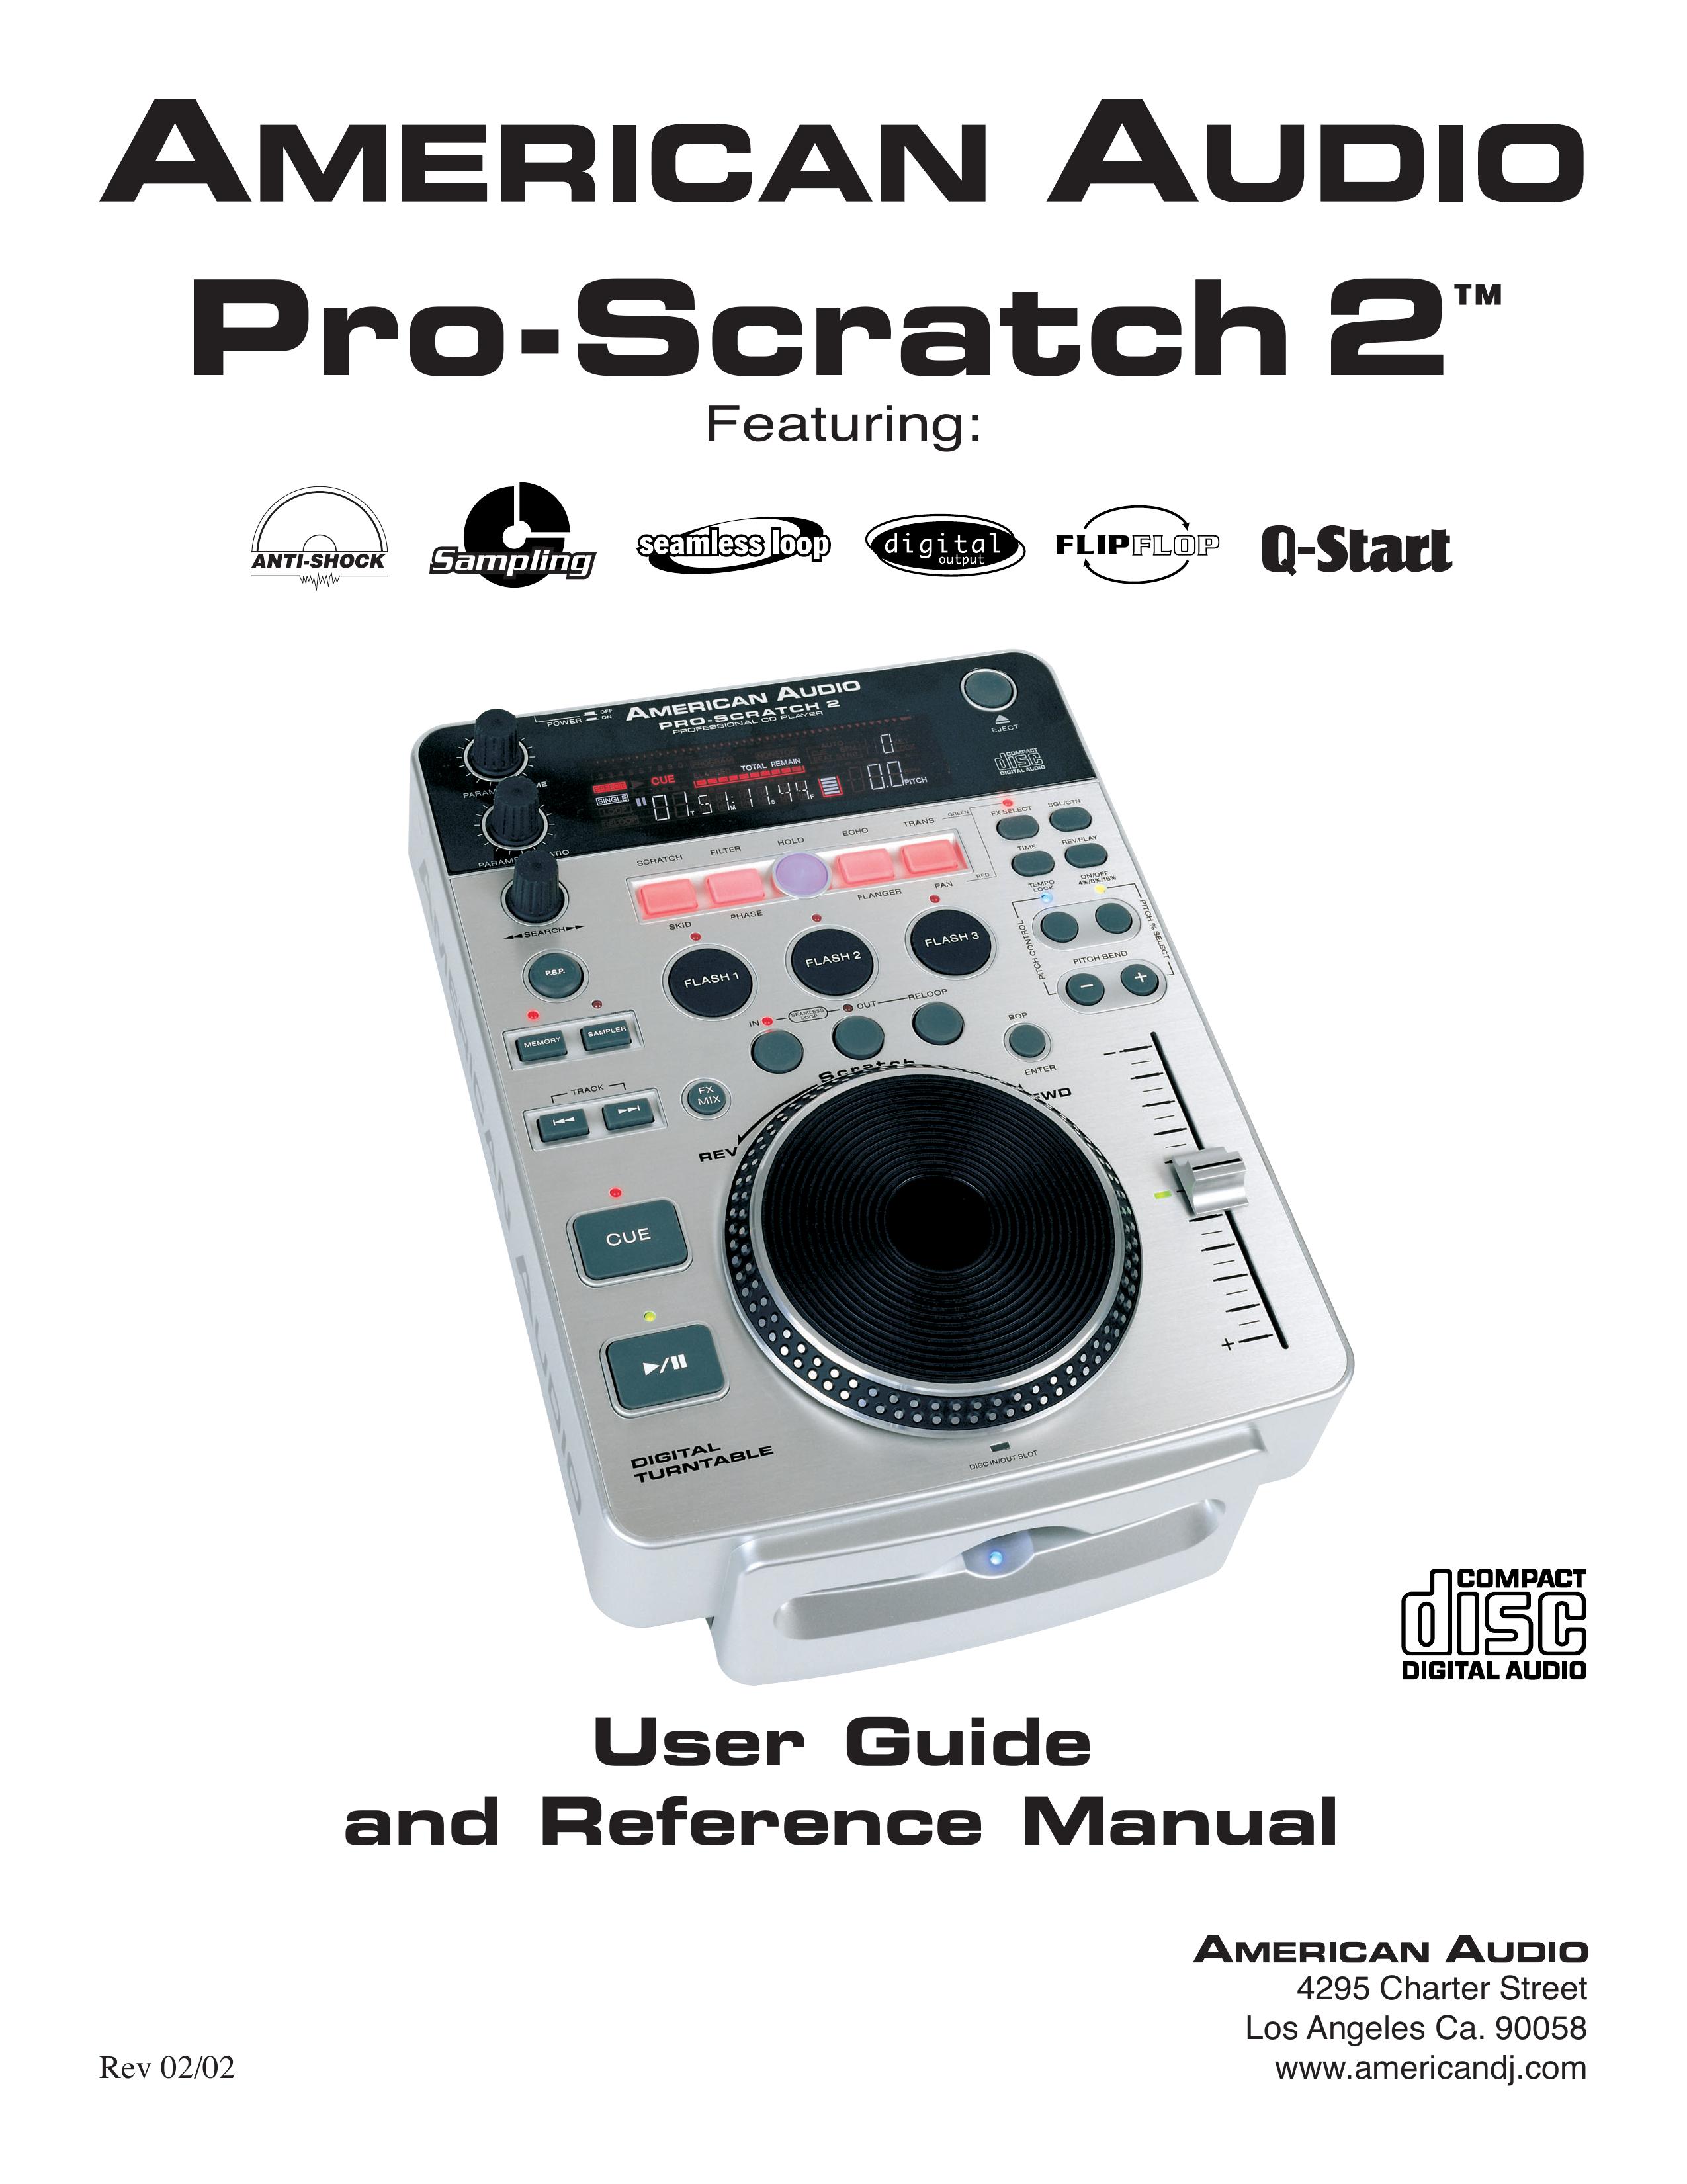 American Audio Pro-Scratch 2 Musical Instrument User Manual